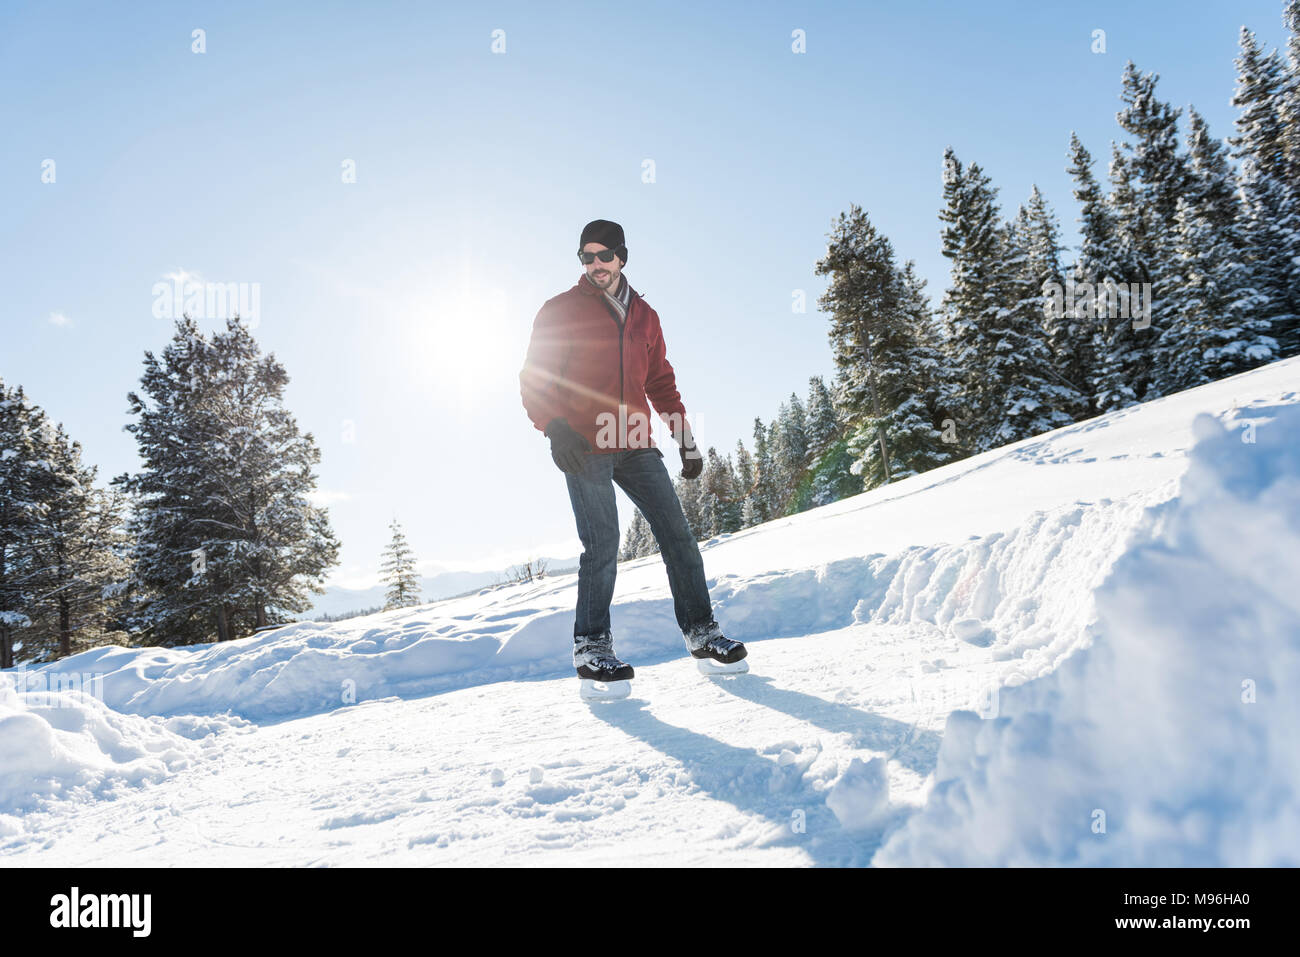 Man skating in snowy landscape Stock Photo